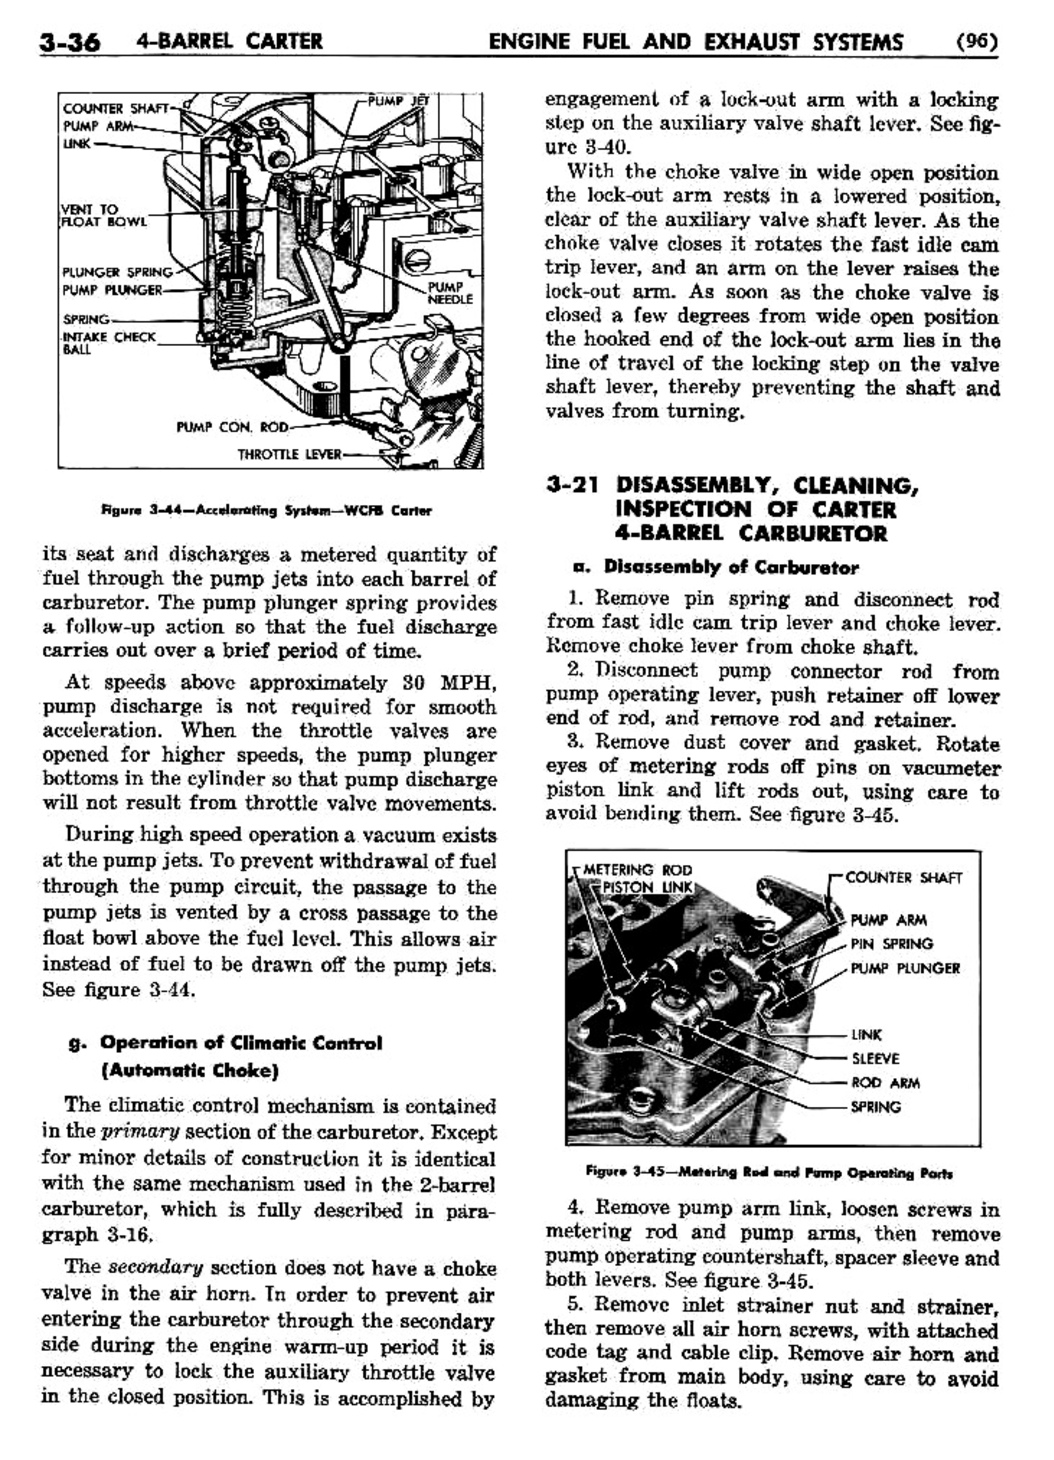 n_04 1956 Buick Shop Manual - Engine Fuel & Exhaust-036-036.jpg